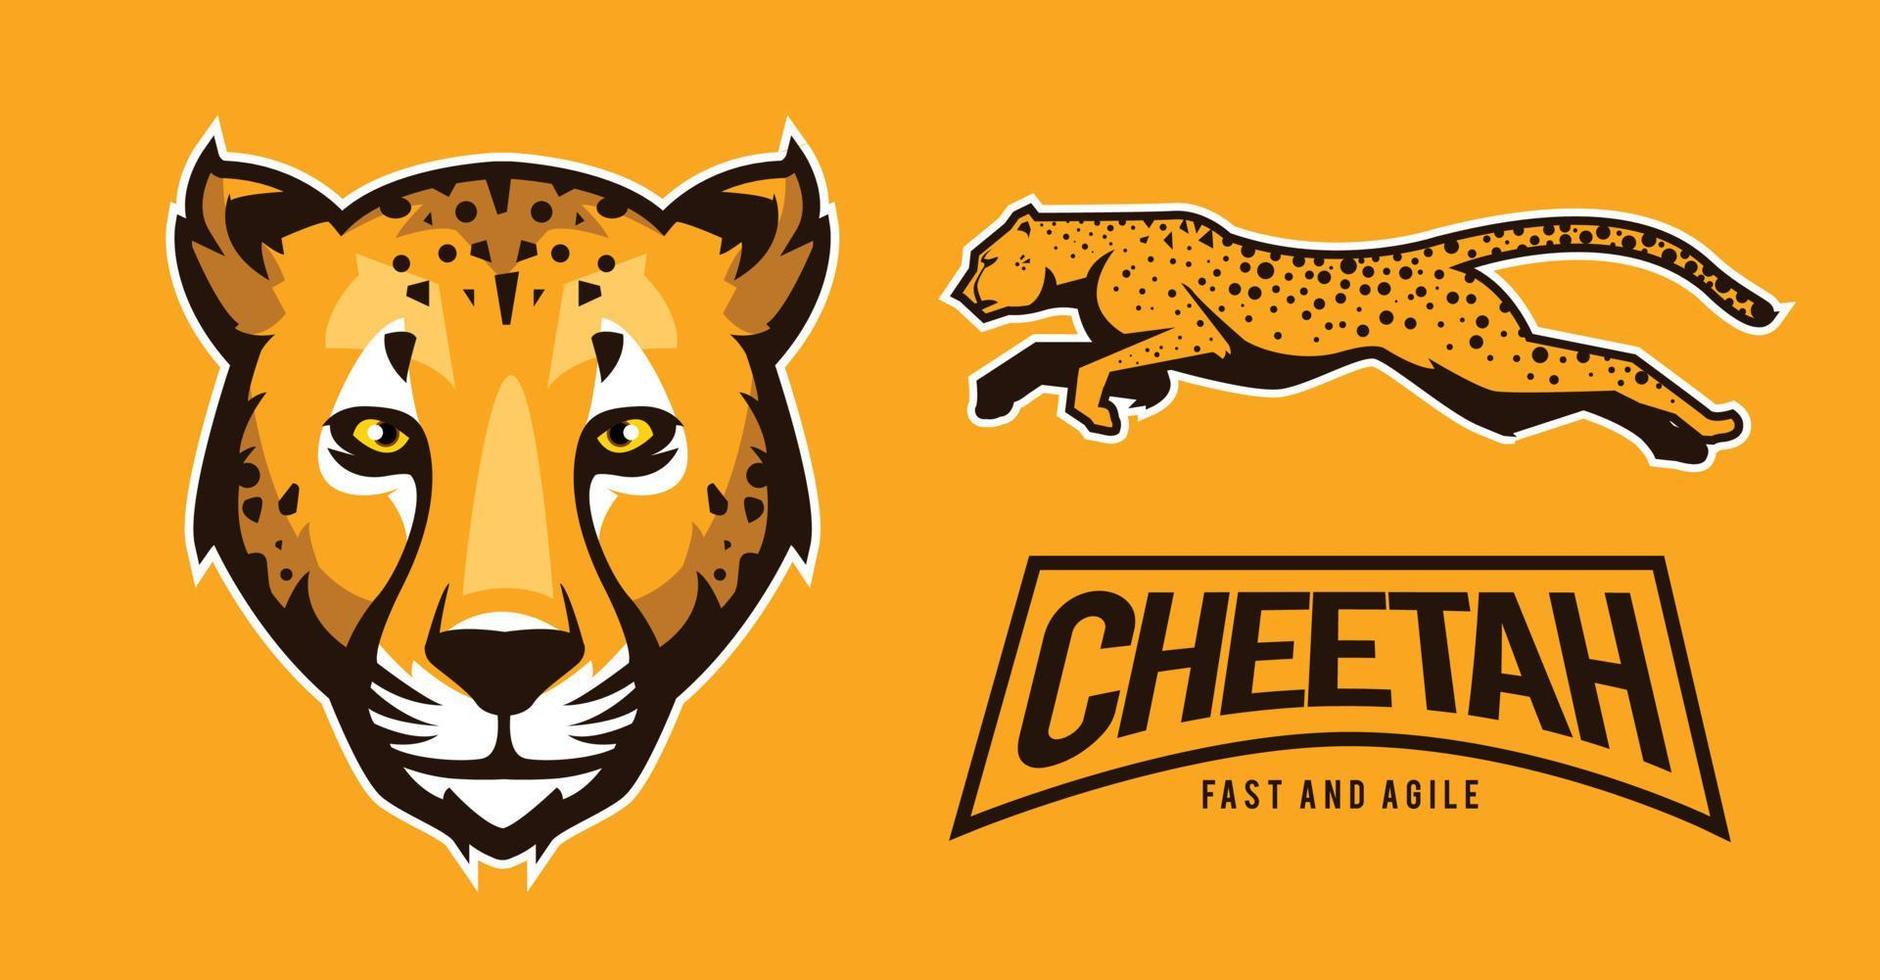 cheetah illustration for logo resource vector